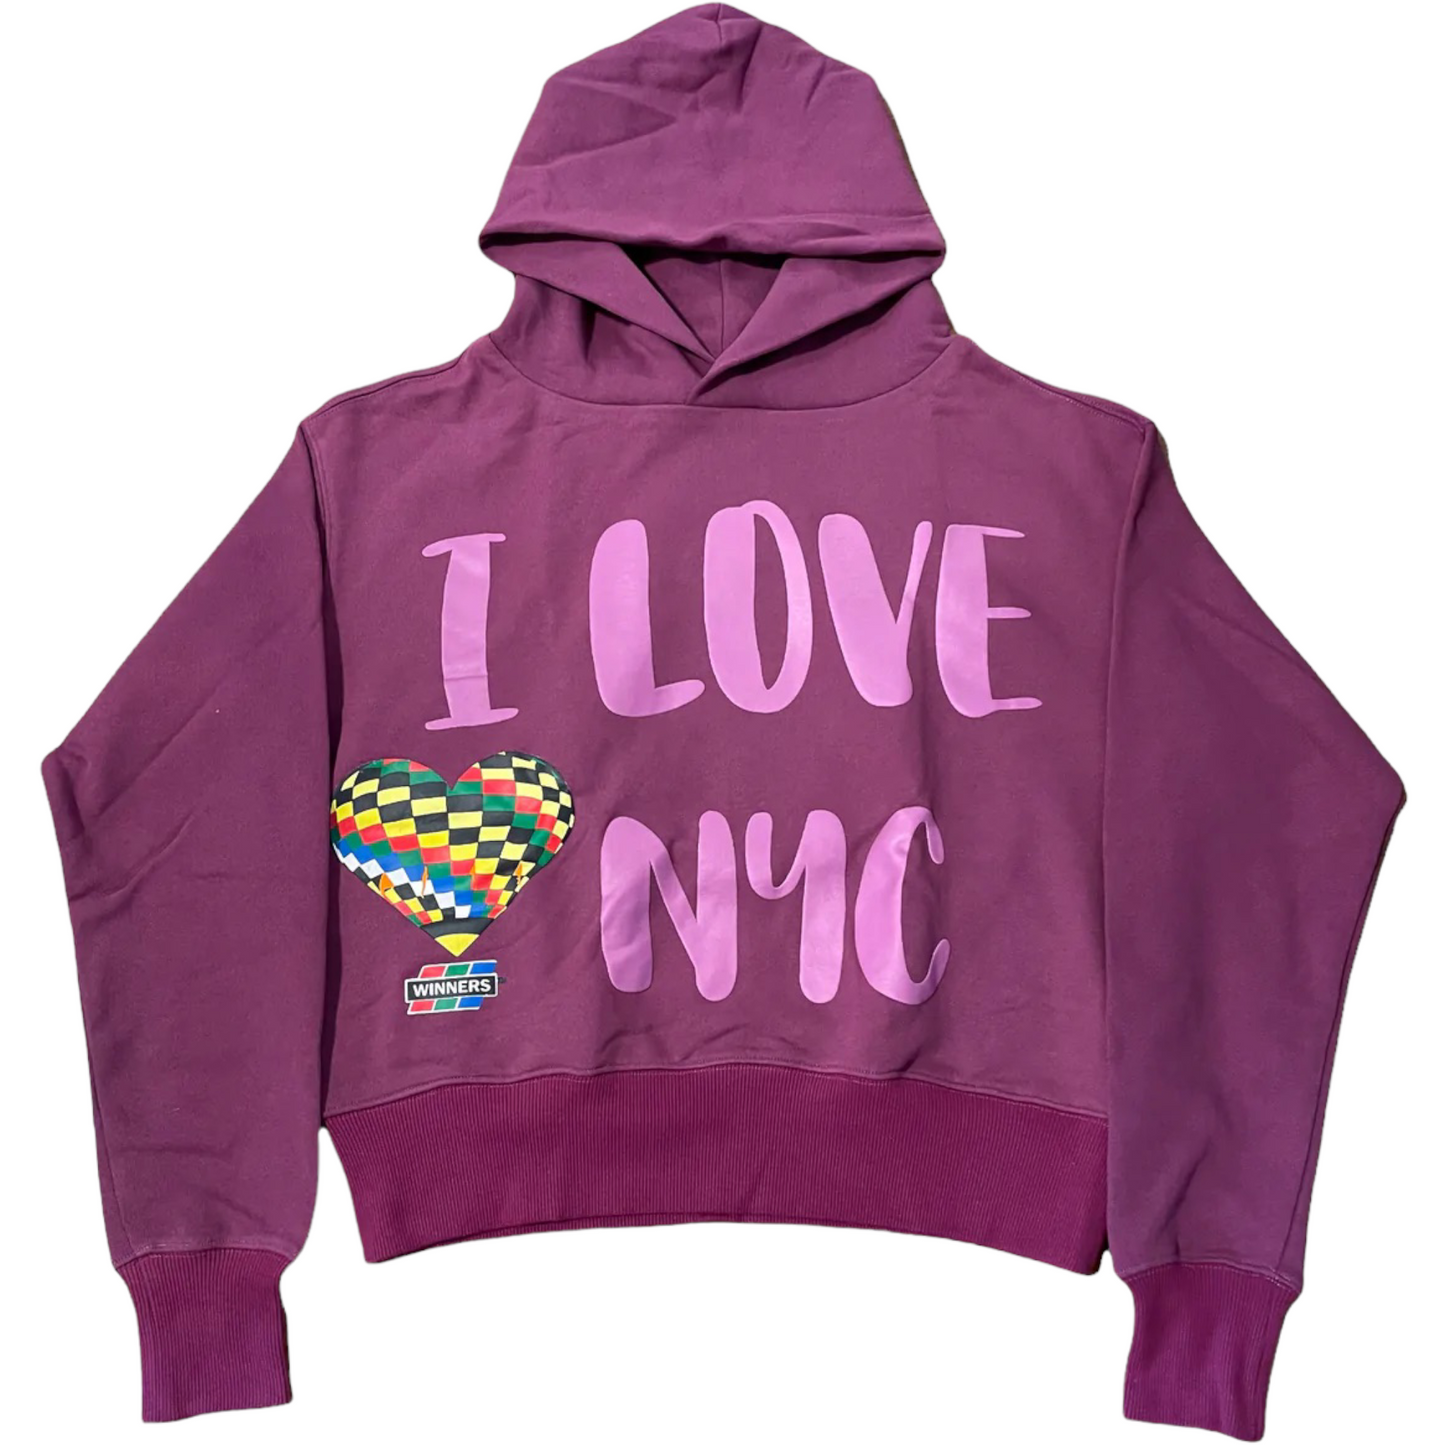 I Love Winners NYC Hoodie - Purple